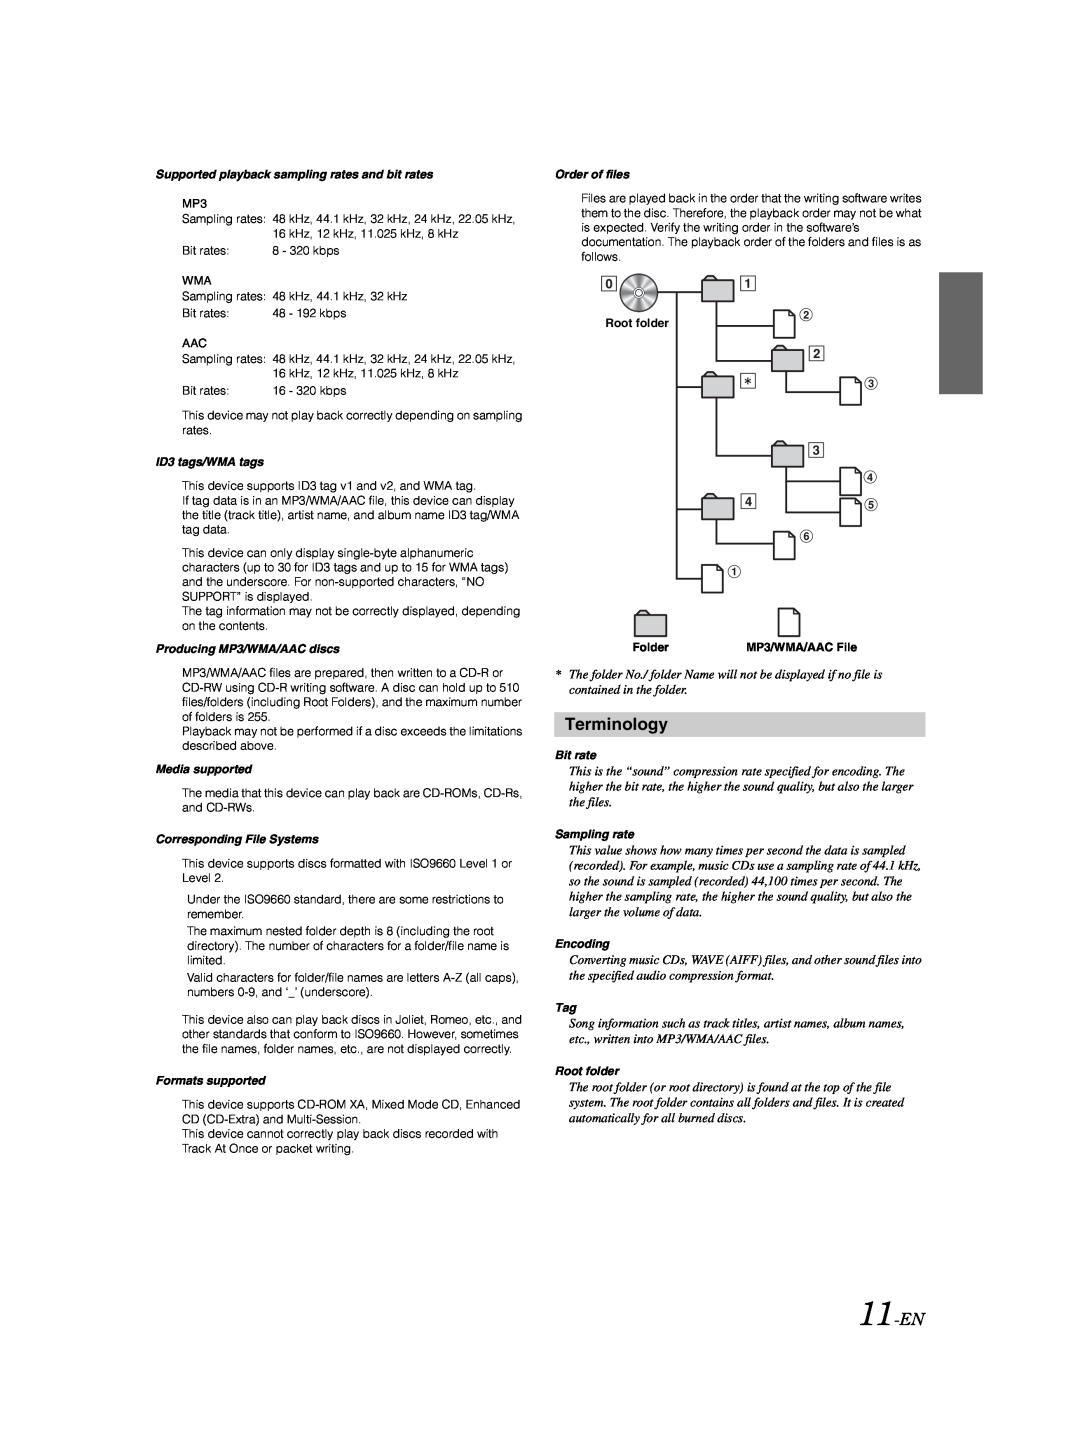 Alpine CDE-9881 owner manual Terminology, 11-EN 